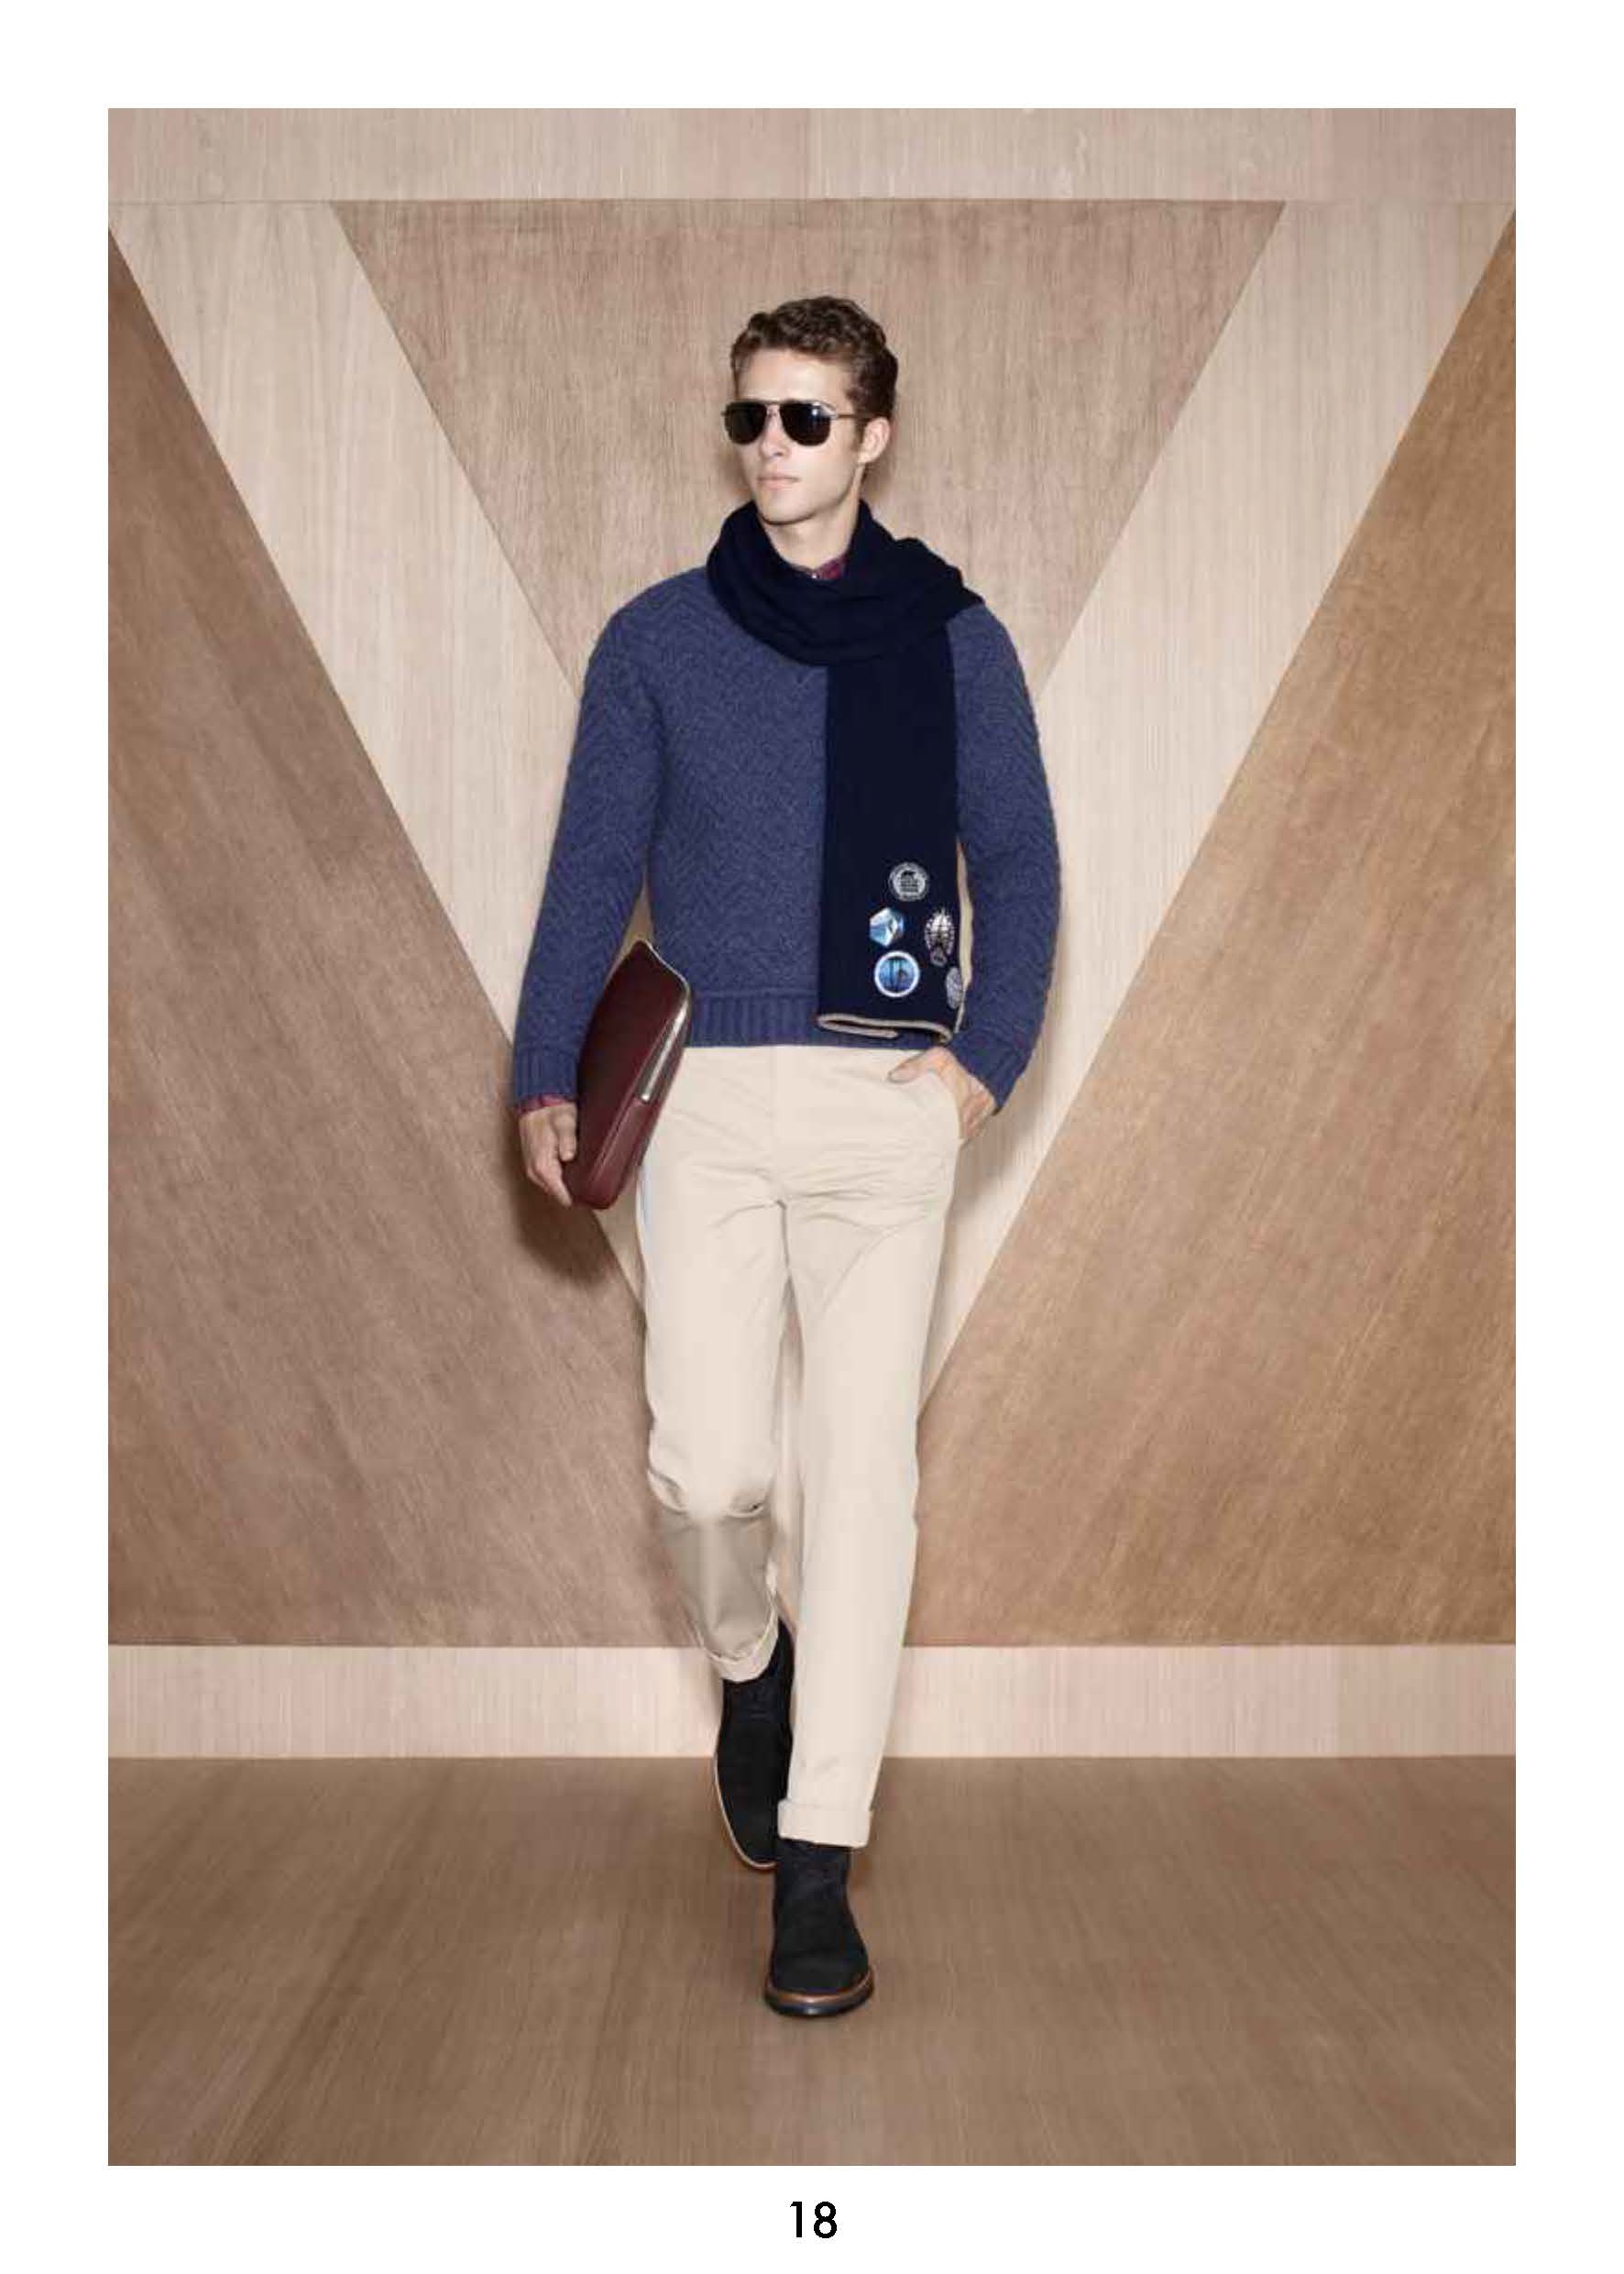 Louis Vuitton Men,s Fall/Winter 2017/18 Advertising Campaign 